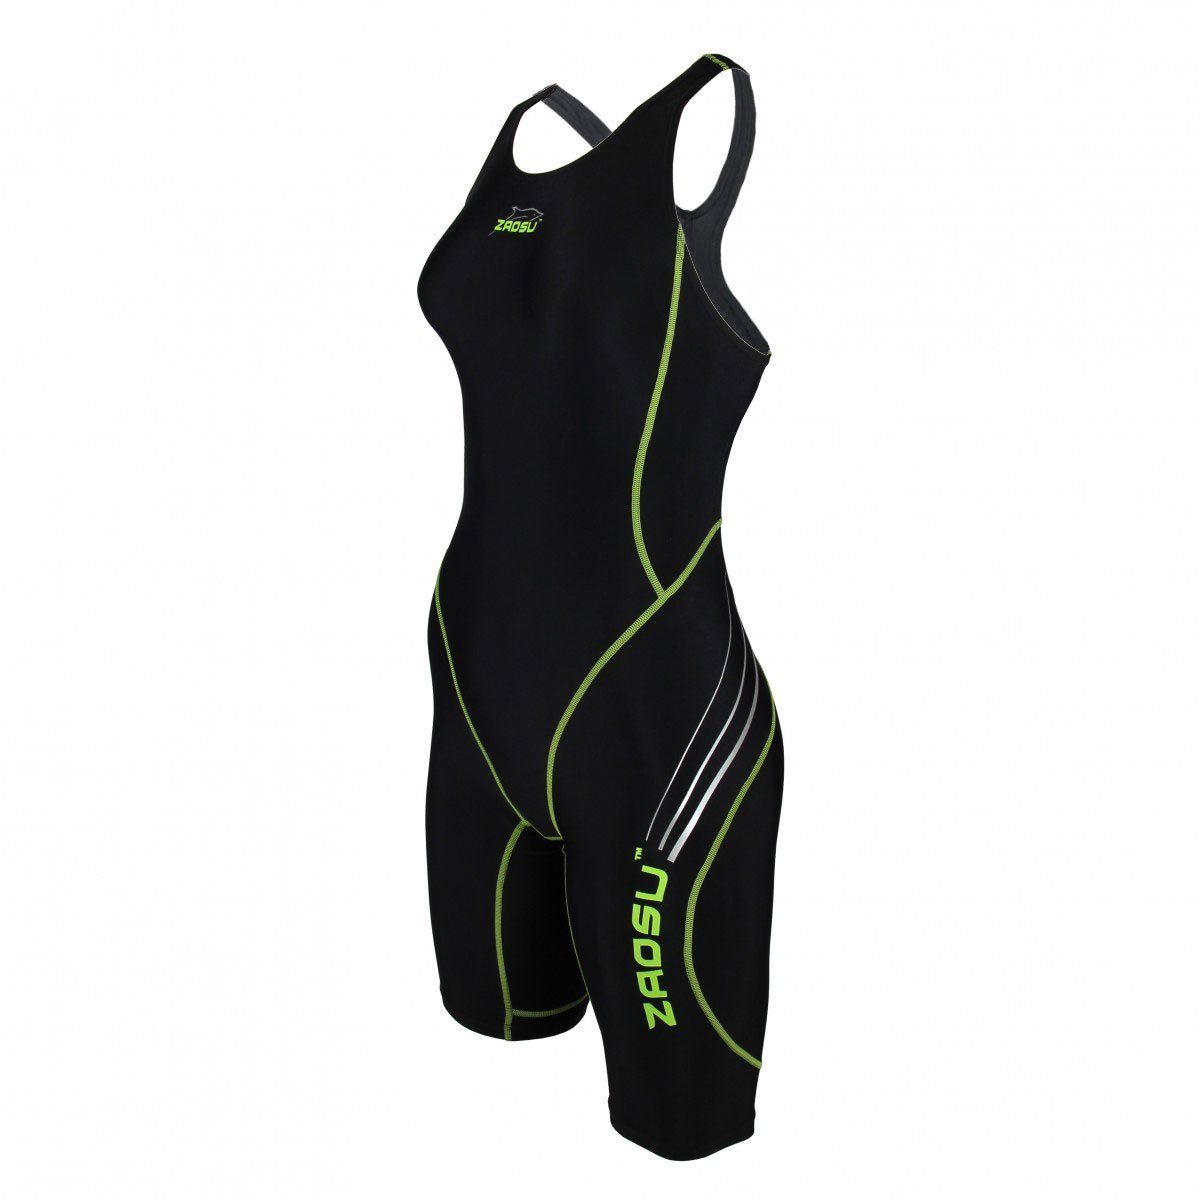 Schwimmanzug Z-Black Schwimmanzug ZAOSU schwarz/grün Wettkampf